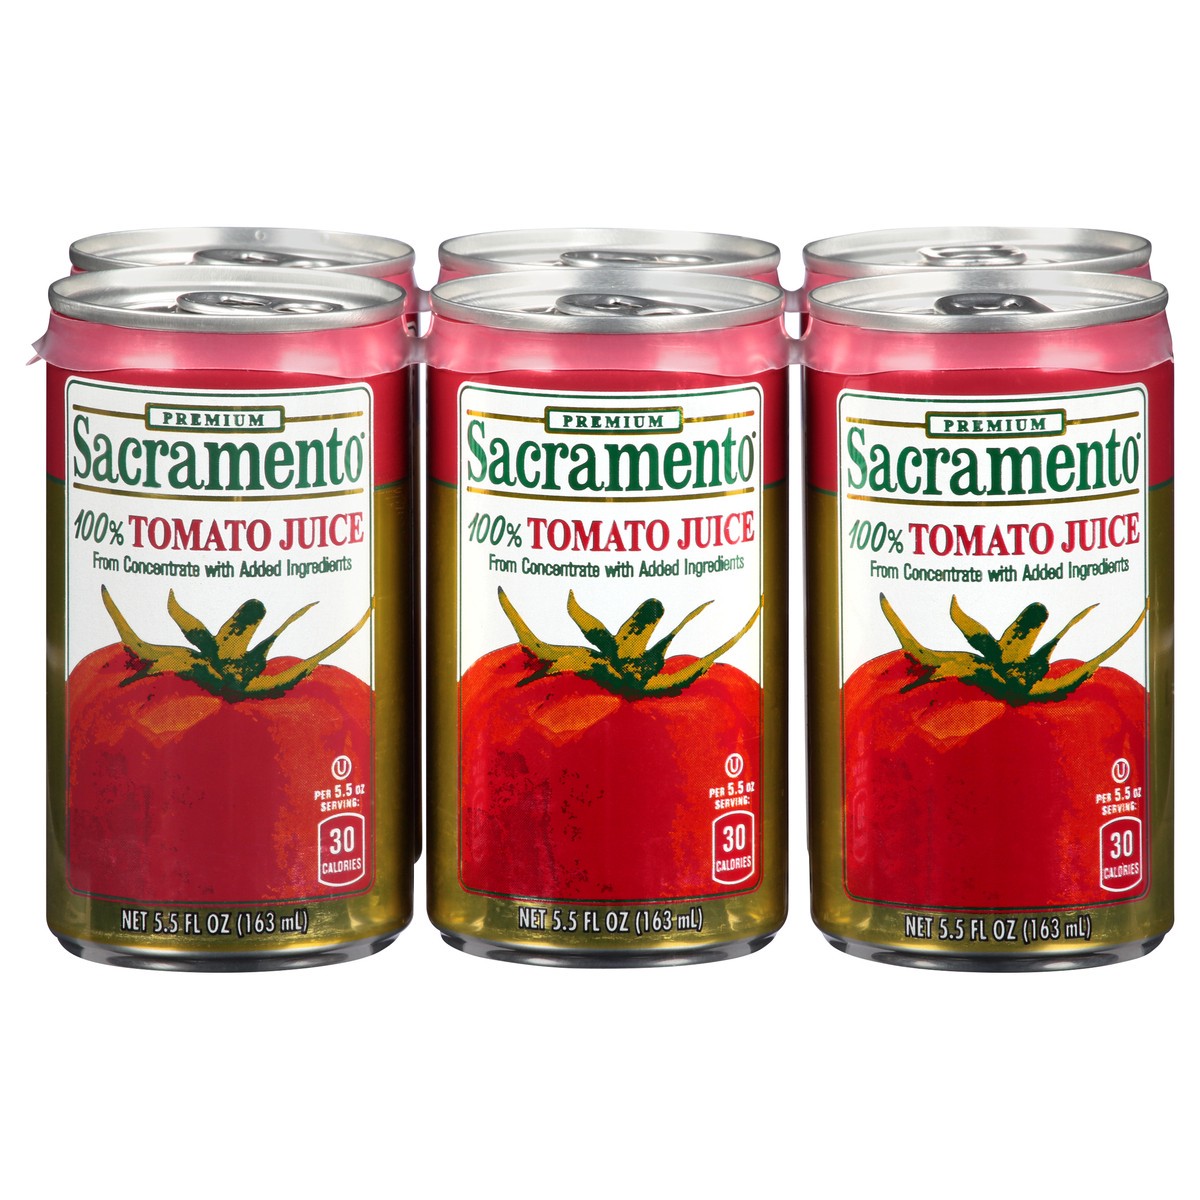 slide 6 of 14, Sacramento Premium 100% Tomato Juice 6-5.5 fl. oz. Cans, 6 ct